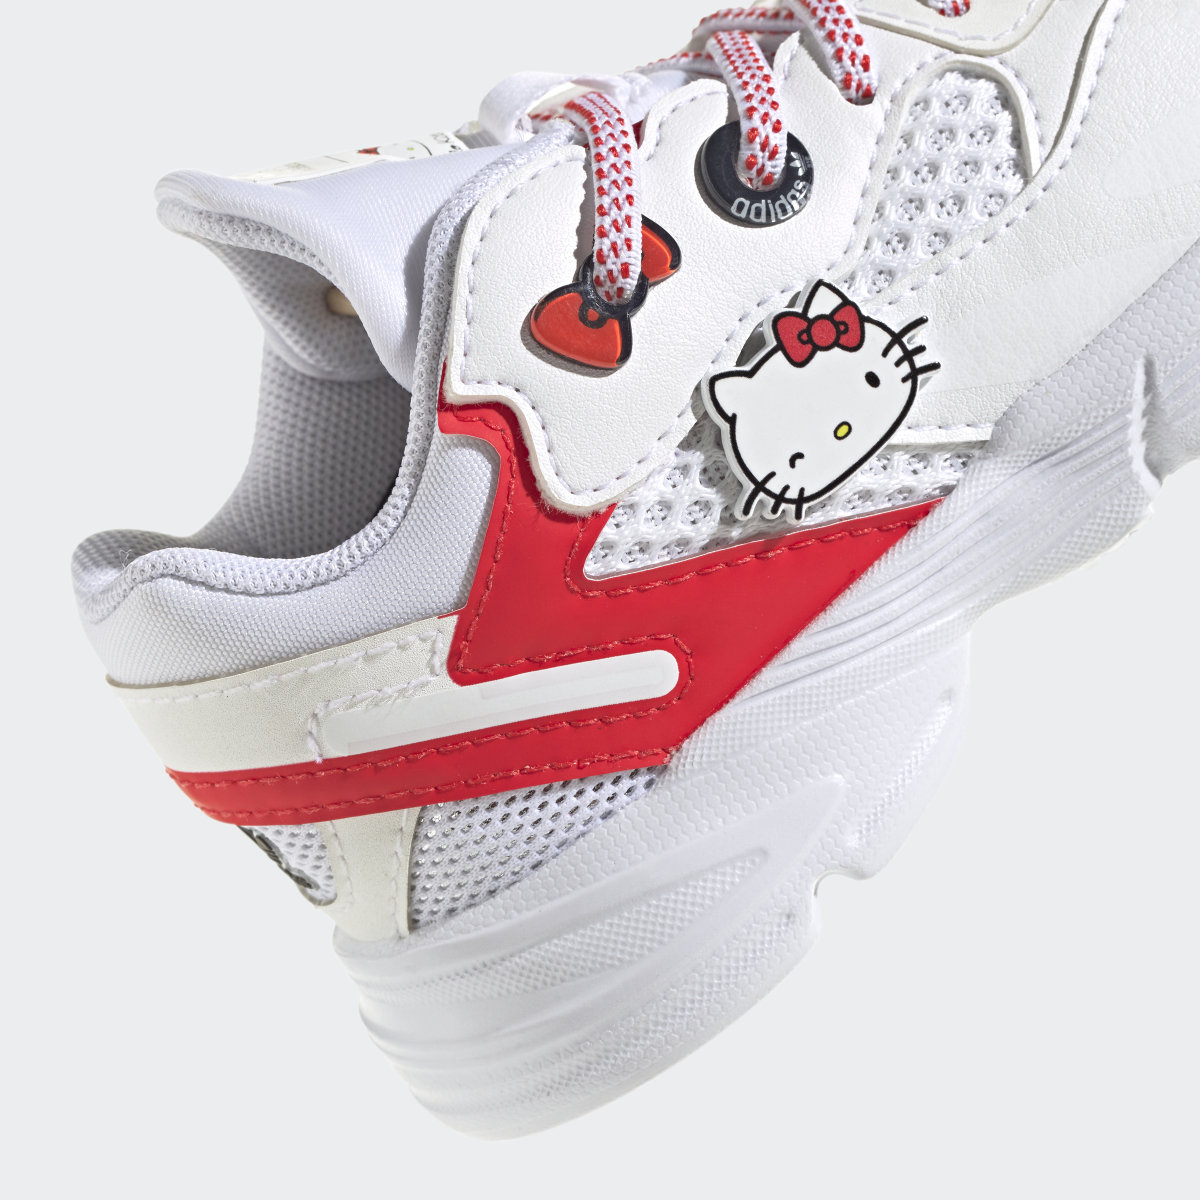 Adidas Hello Kitty Astir Shoes. 11